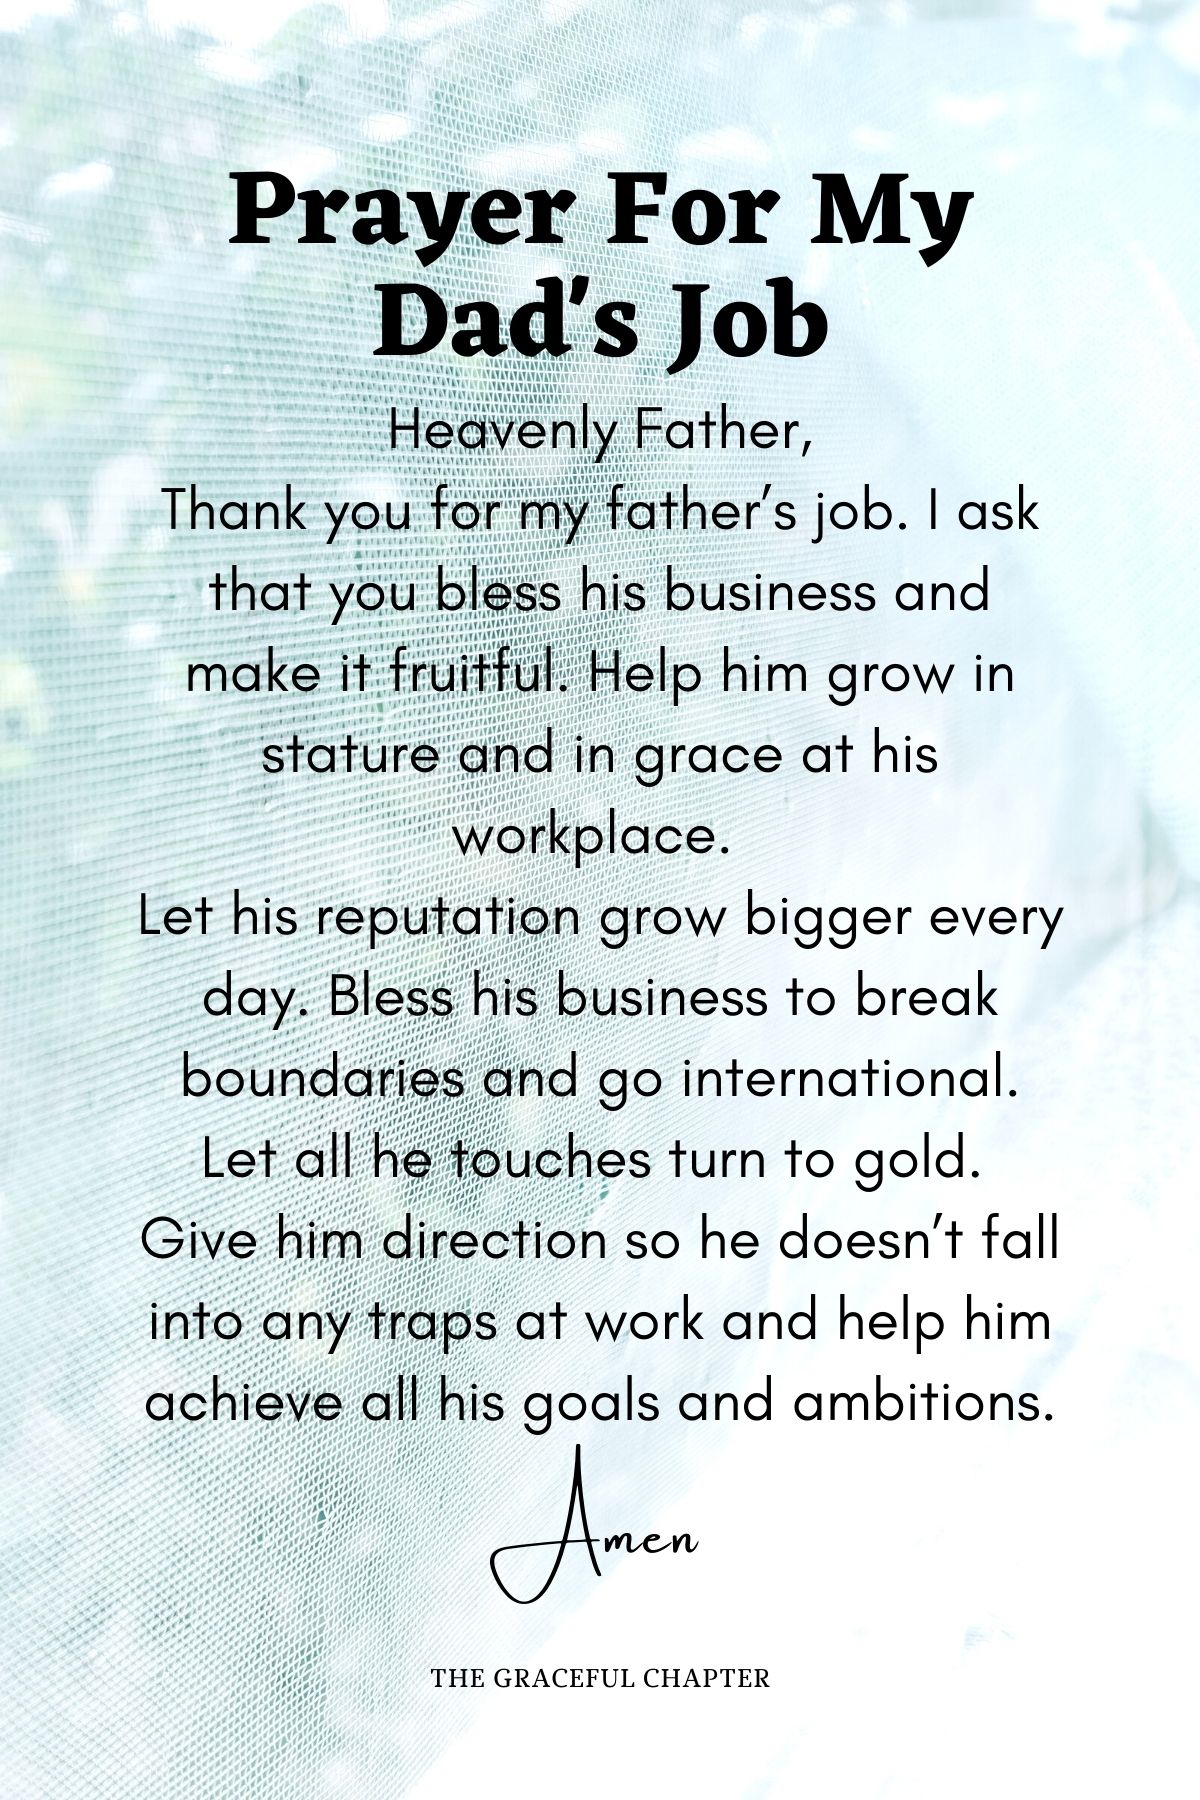 Prayer for my dad's job